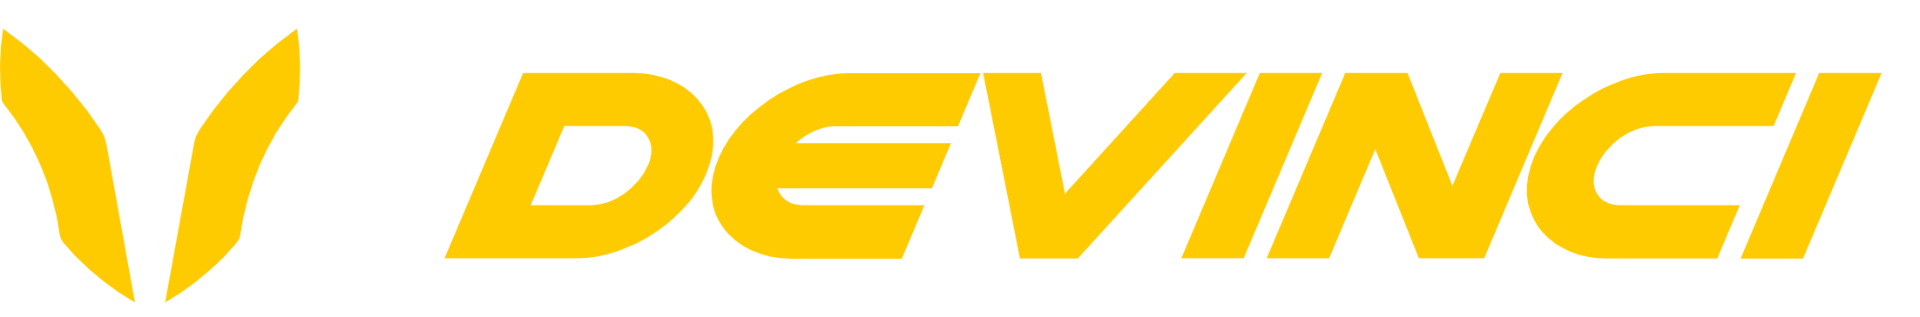 Devinci Bicycles Logo